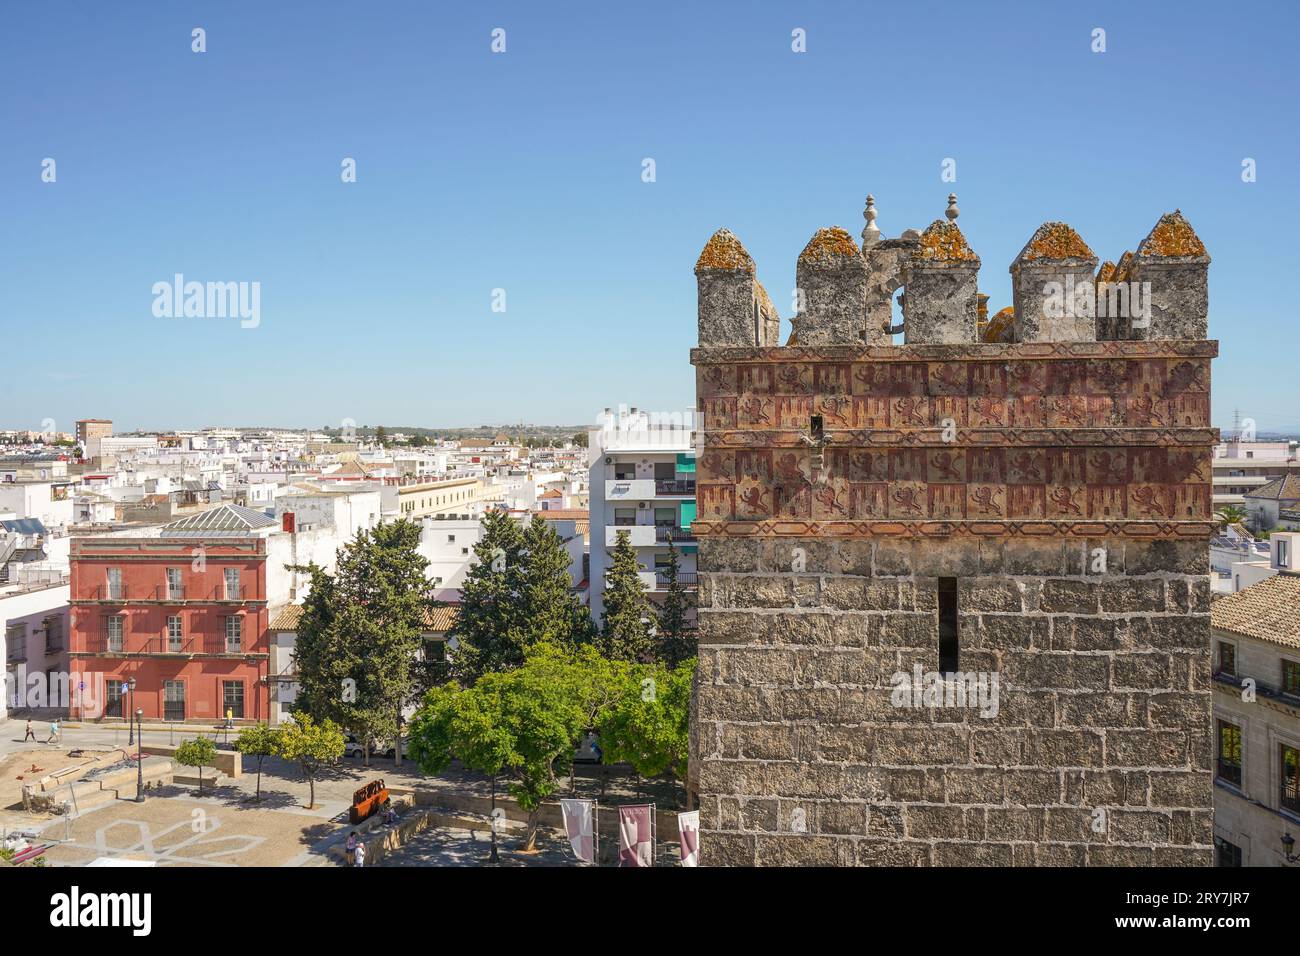 Turm der Burg von San Marcos, Turm, El Puerto de Santa María, Festung aus dem 13. Jahrhundert, Cadiz, Andalusien, Spanien. Stockfoto